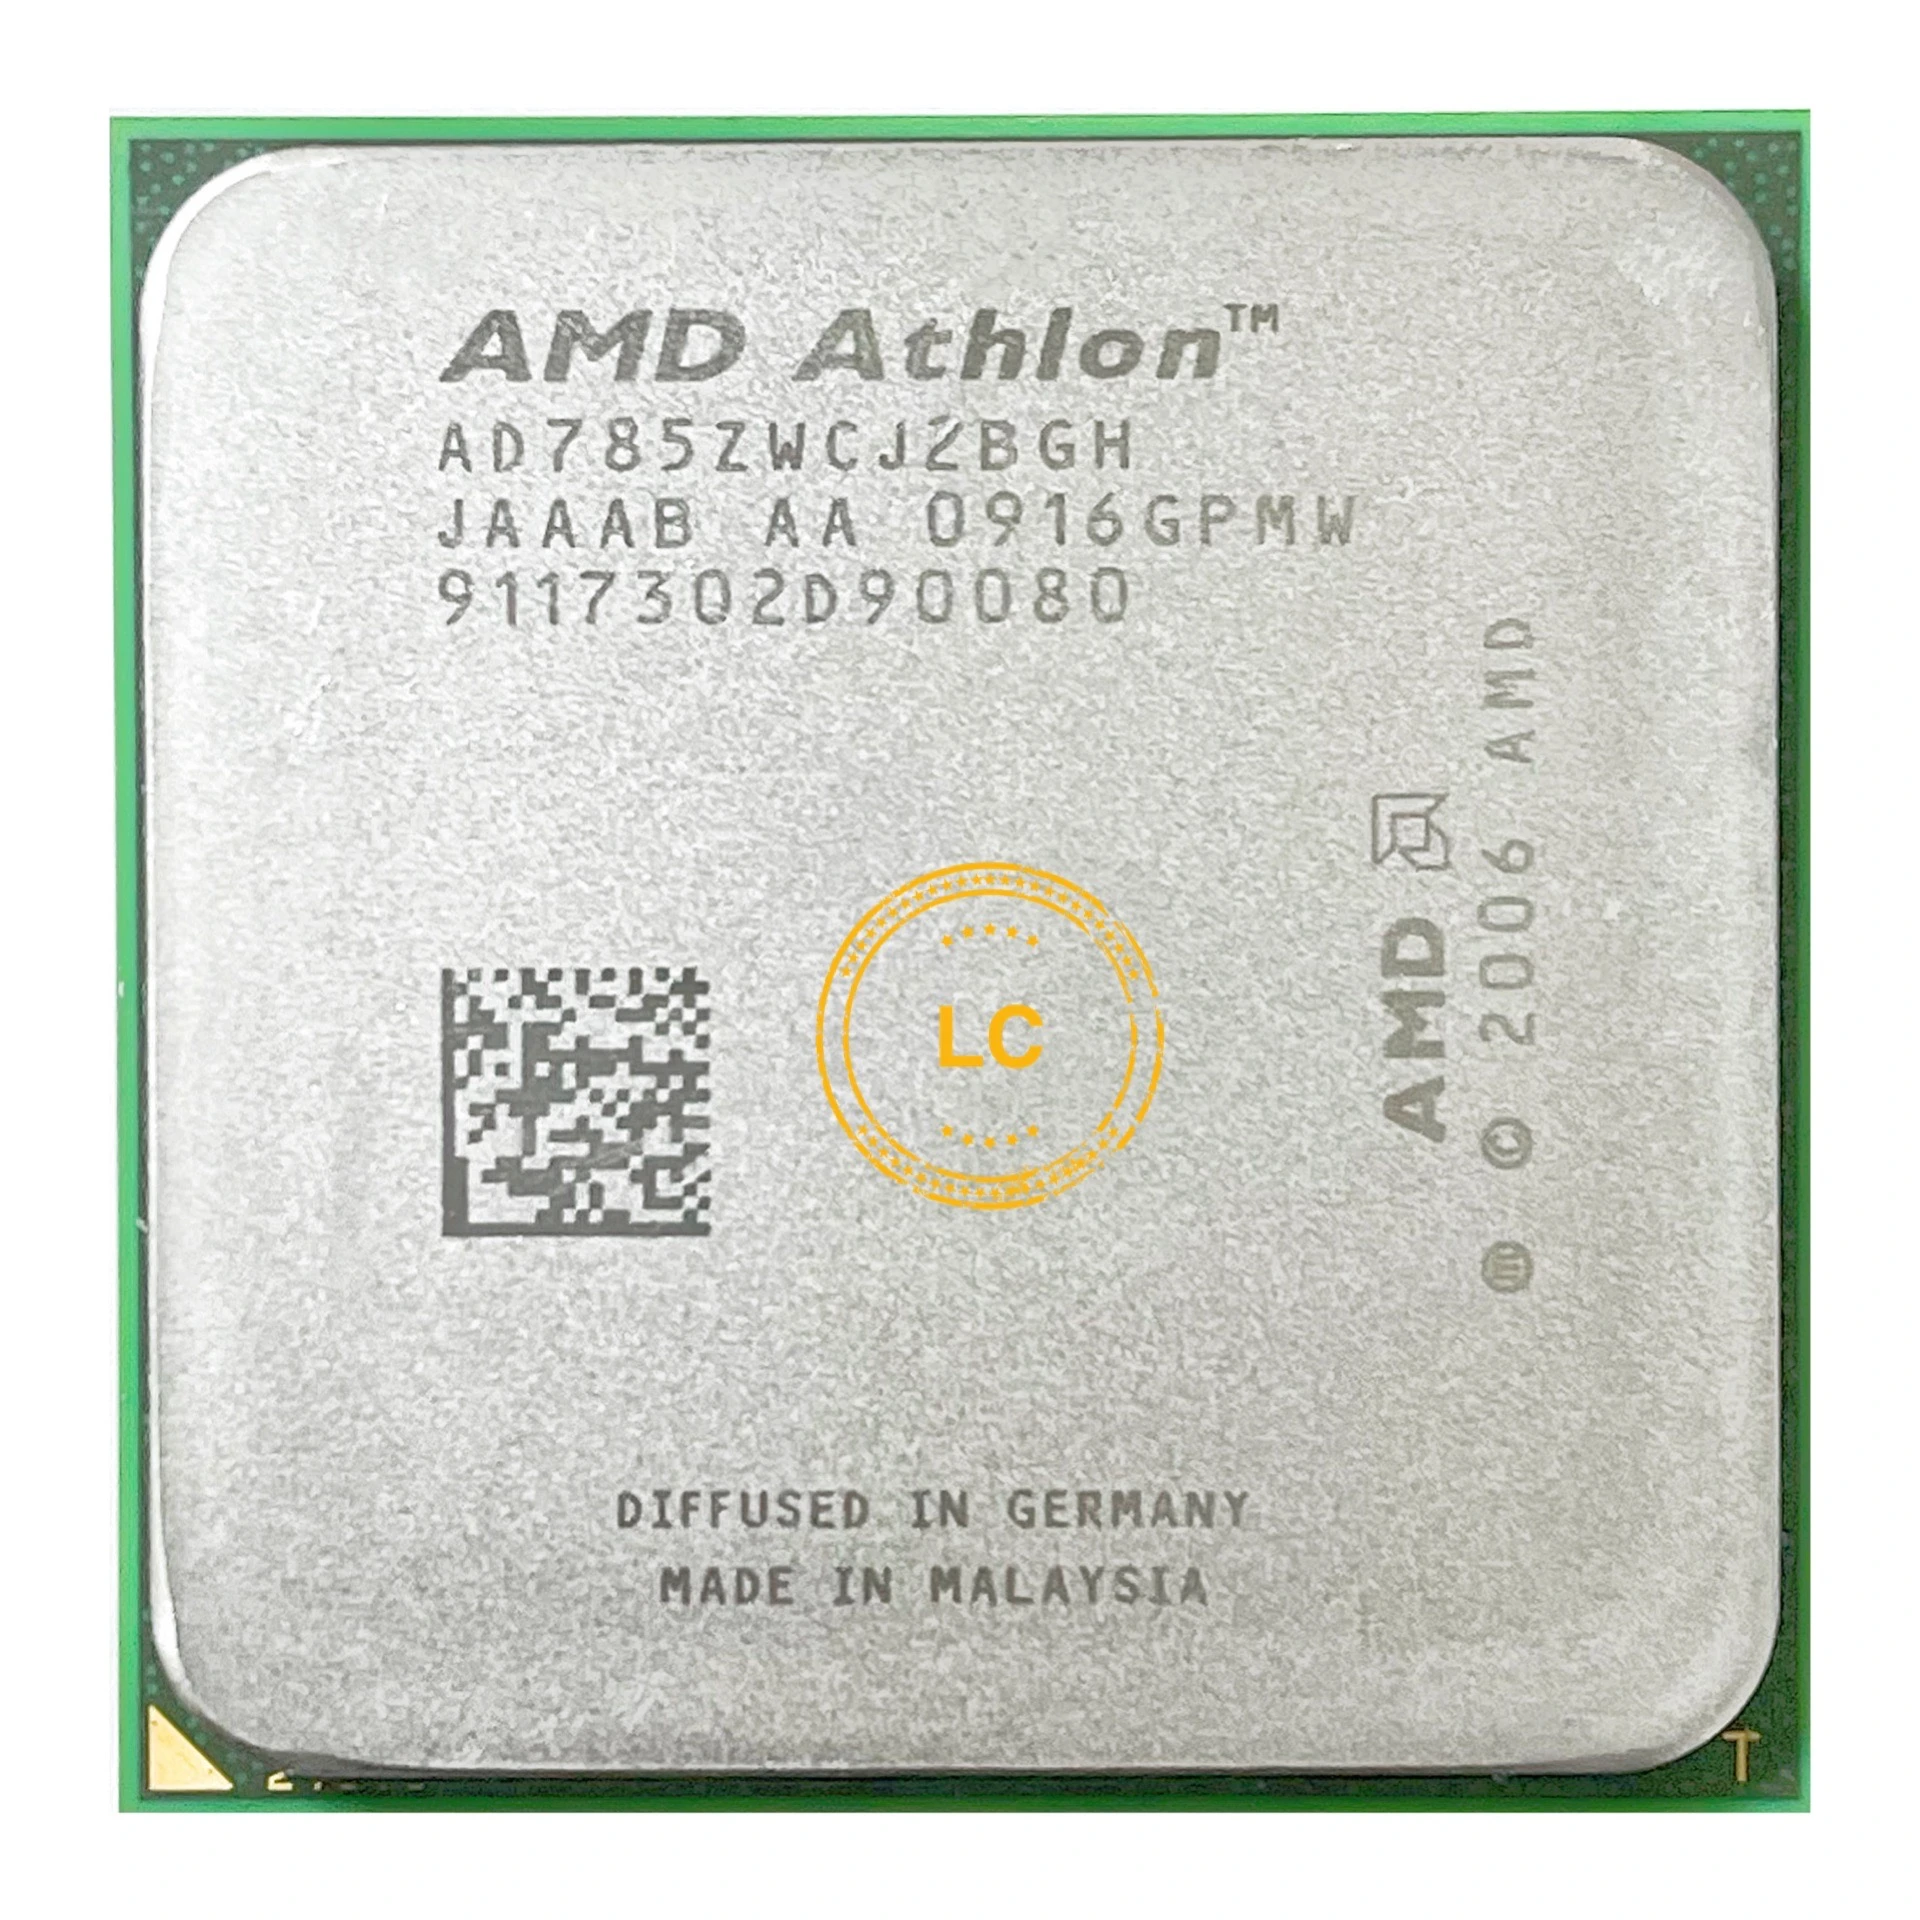 AMD Athlon X2 7850 2.8 GHz Dual Core CPU Processor AD785ZWCJ2BGH Socket  AM2+|CPUs| - AliExpress